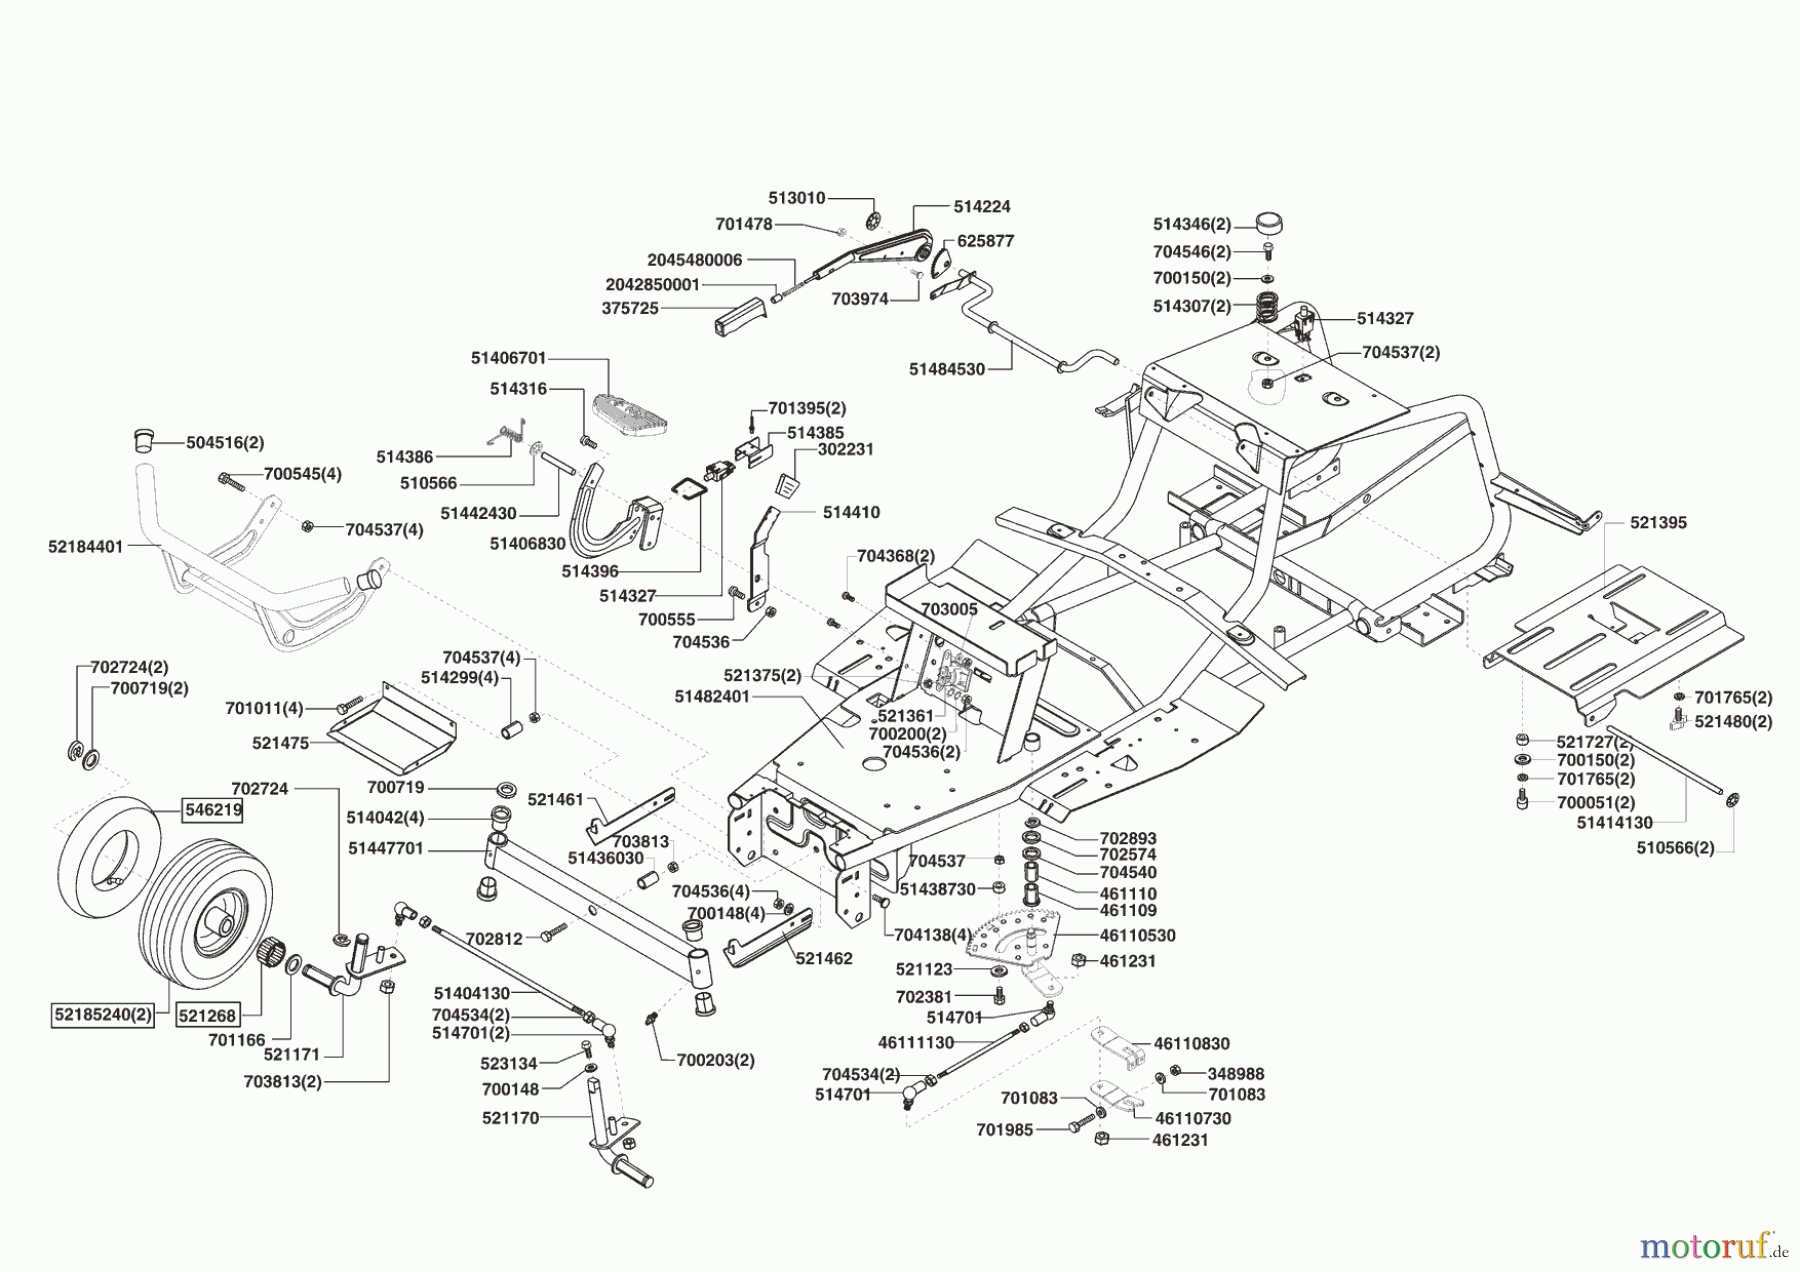  AL-KO Gartentechnik Rasentraktor T18/102HD MARINA Seite 2